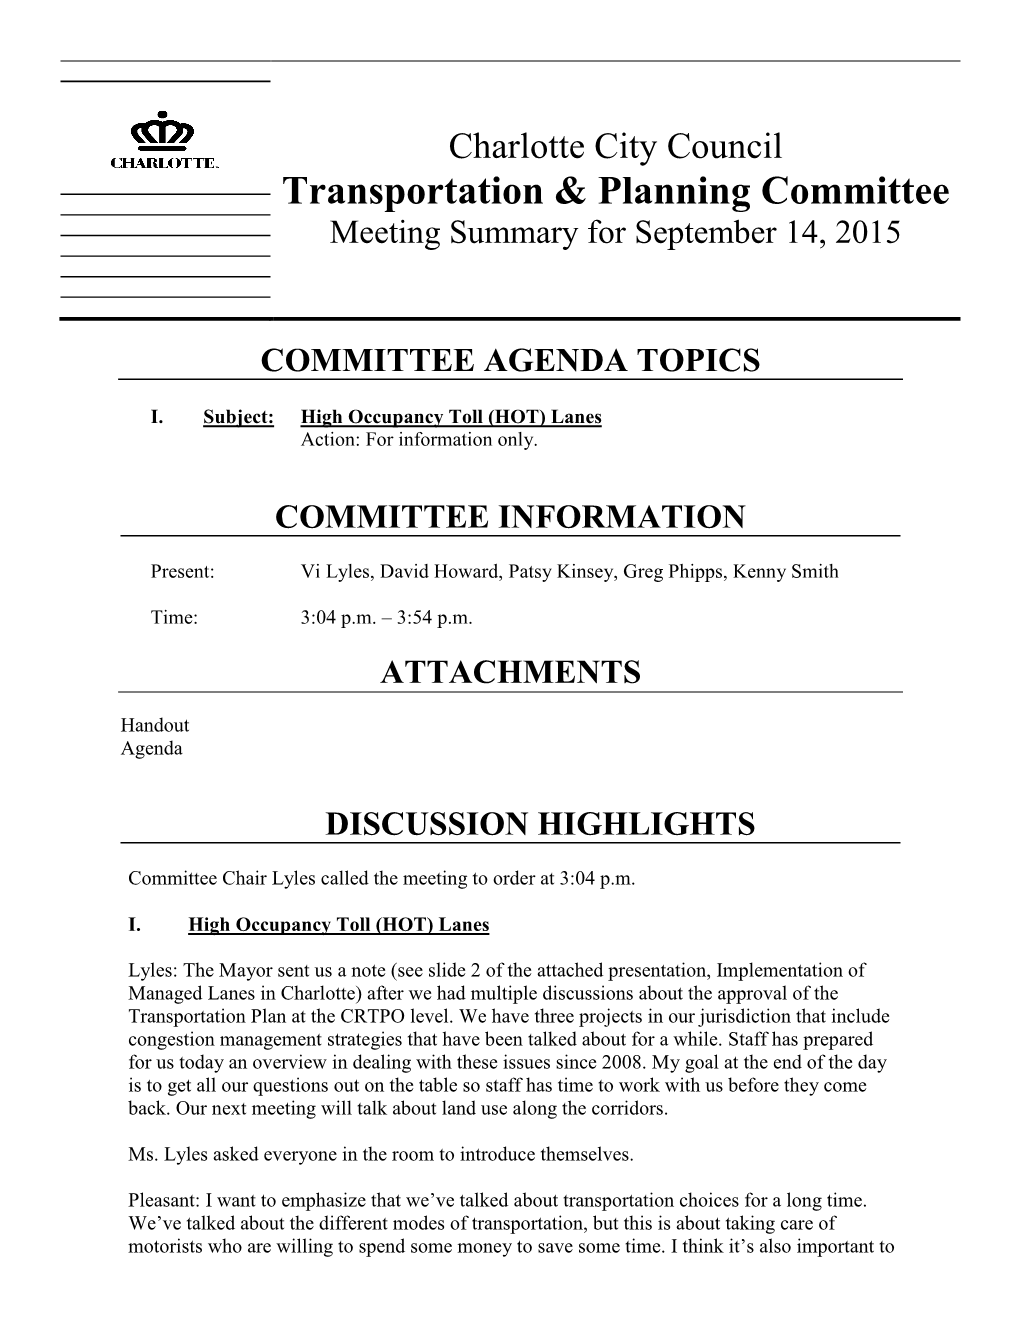 Transportation & Planning Committee